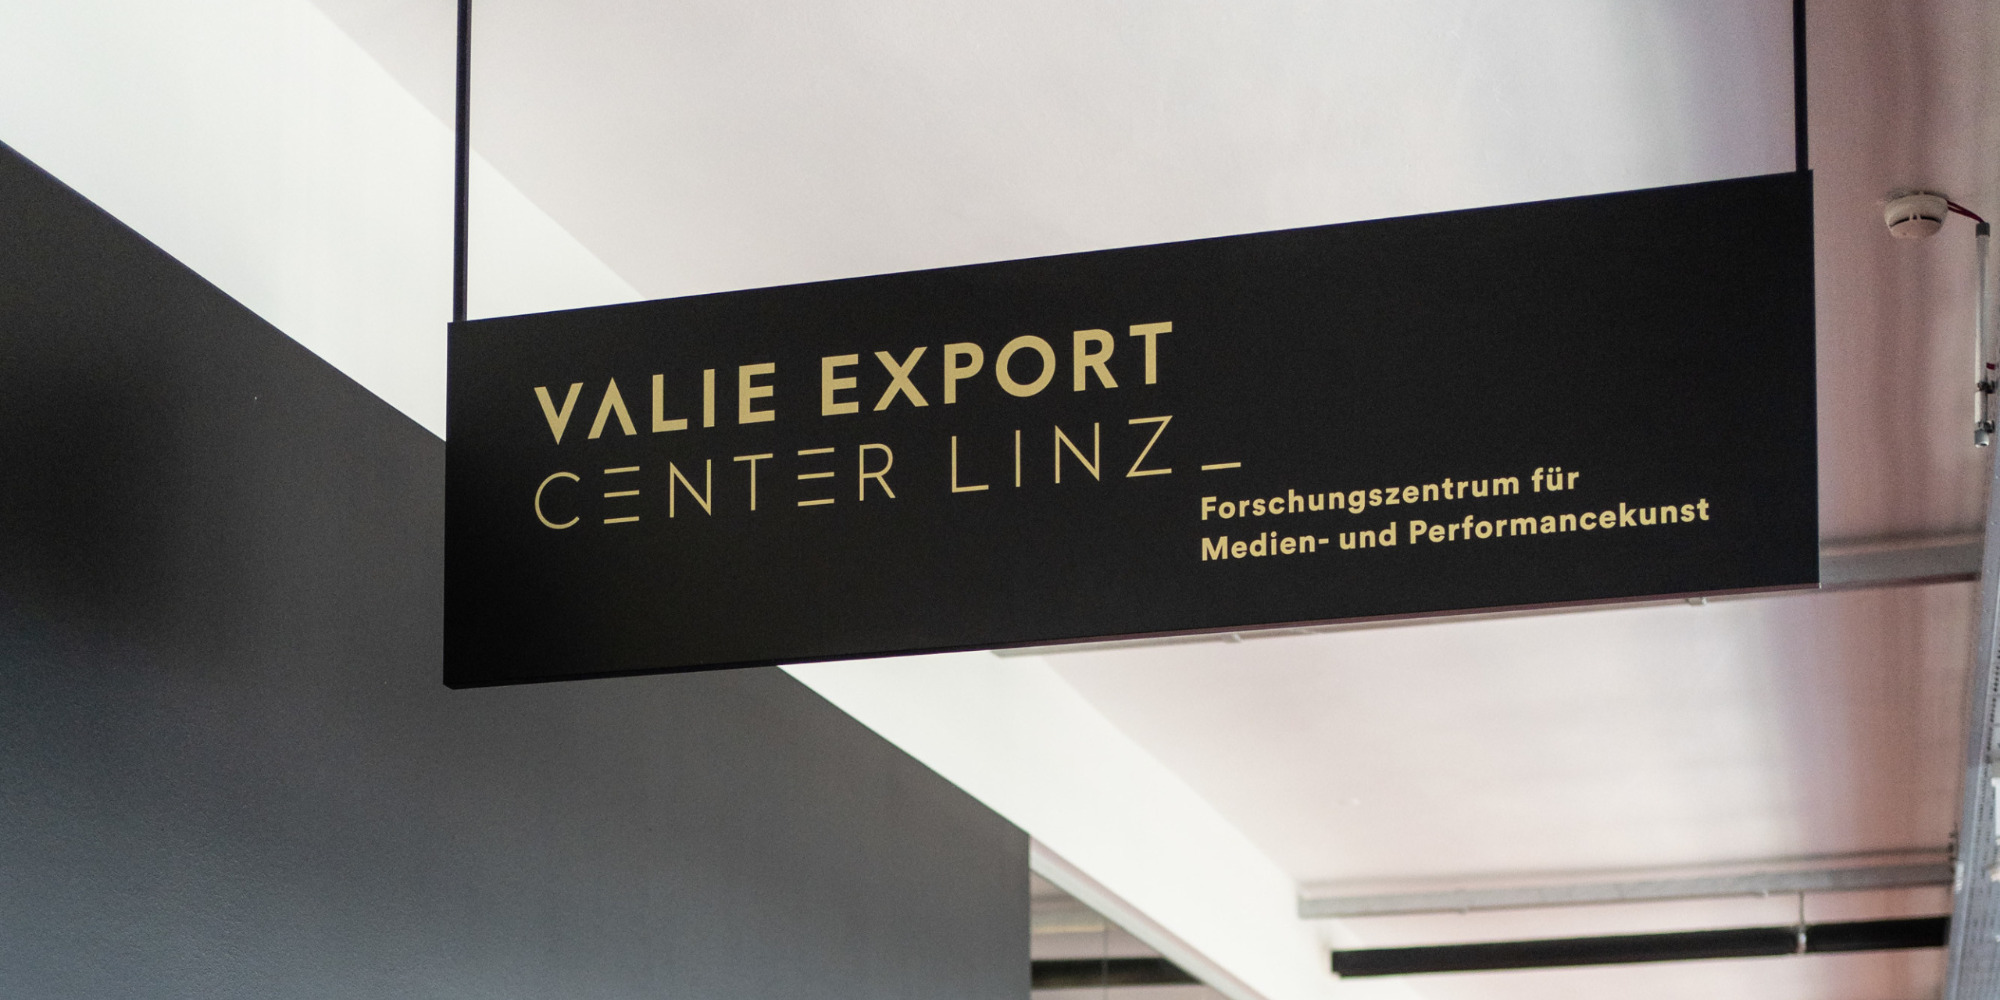 Valie Export Center